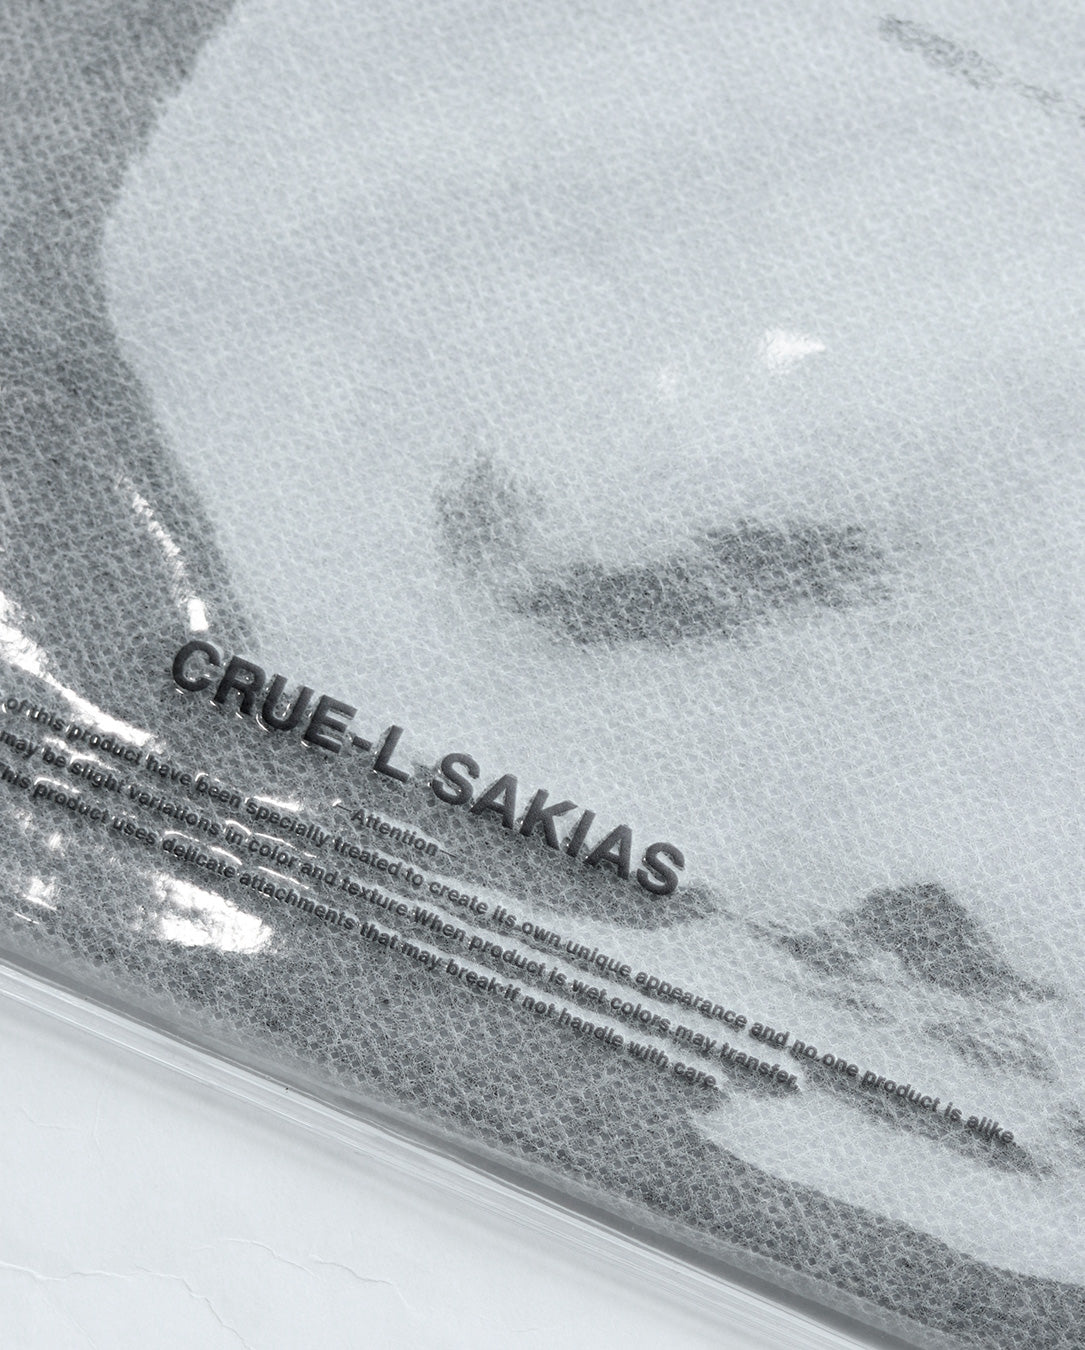 CRUE-L SAKIAS 7inch RECORD BAG